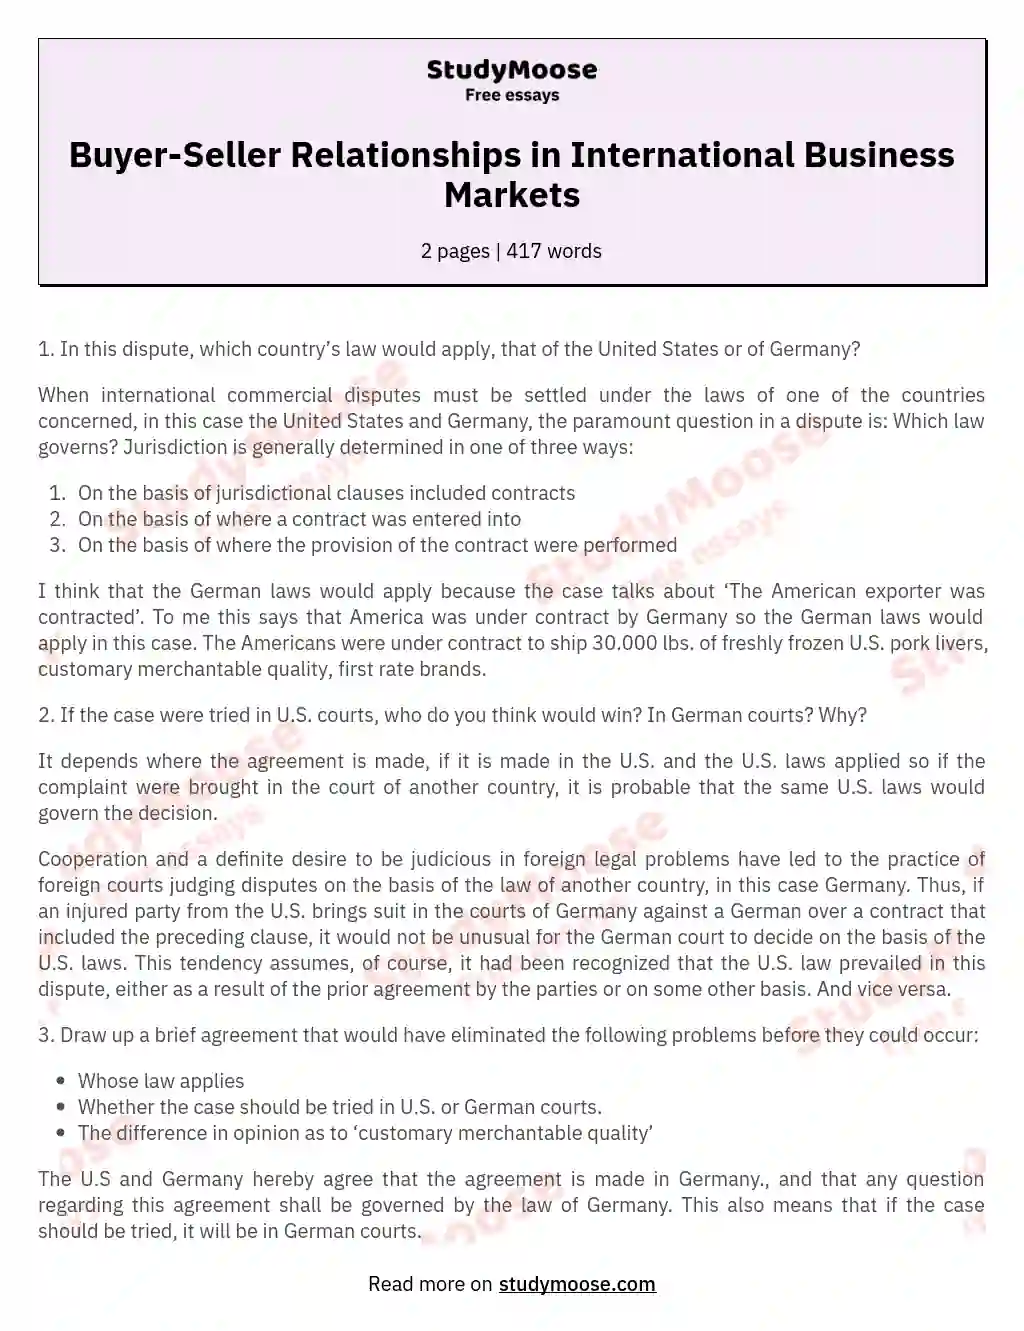 Buyer-Seller Relationships in International Business Markets